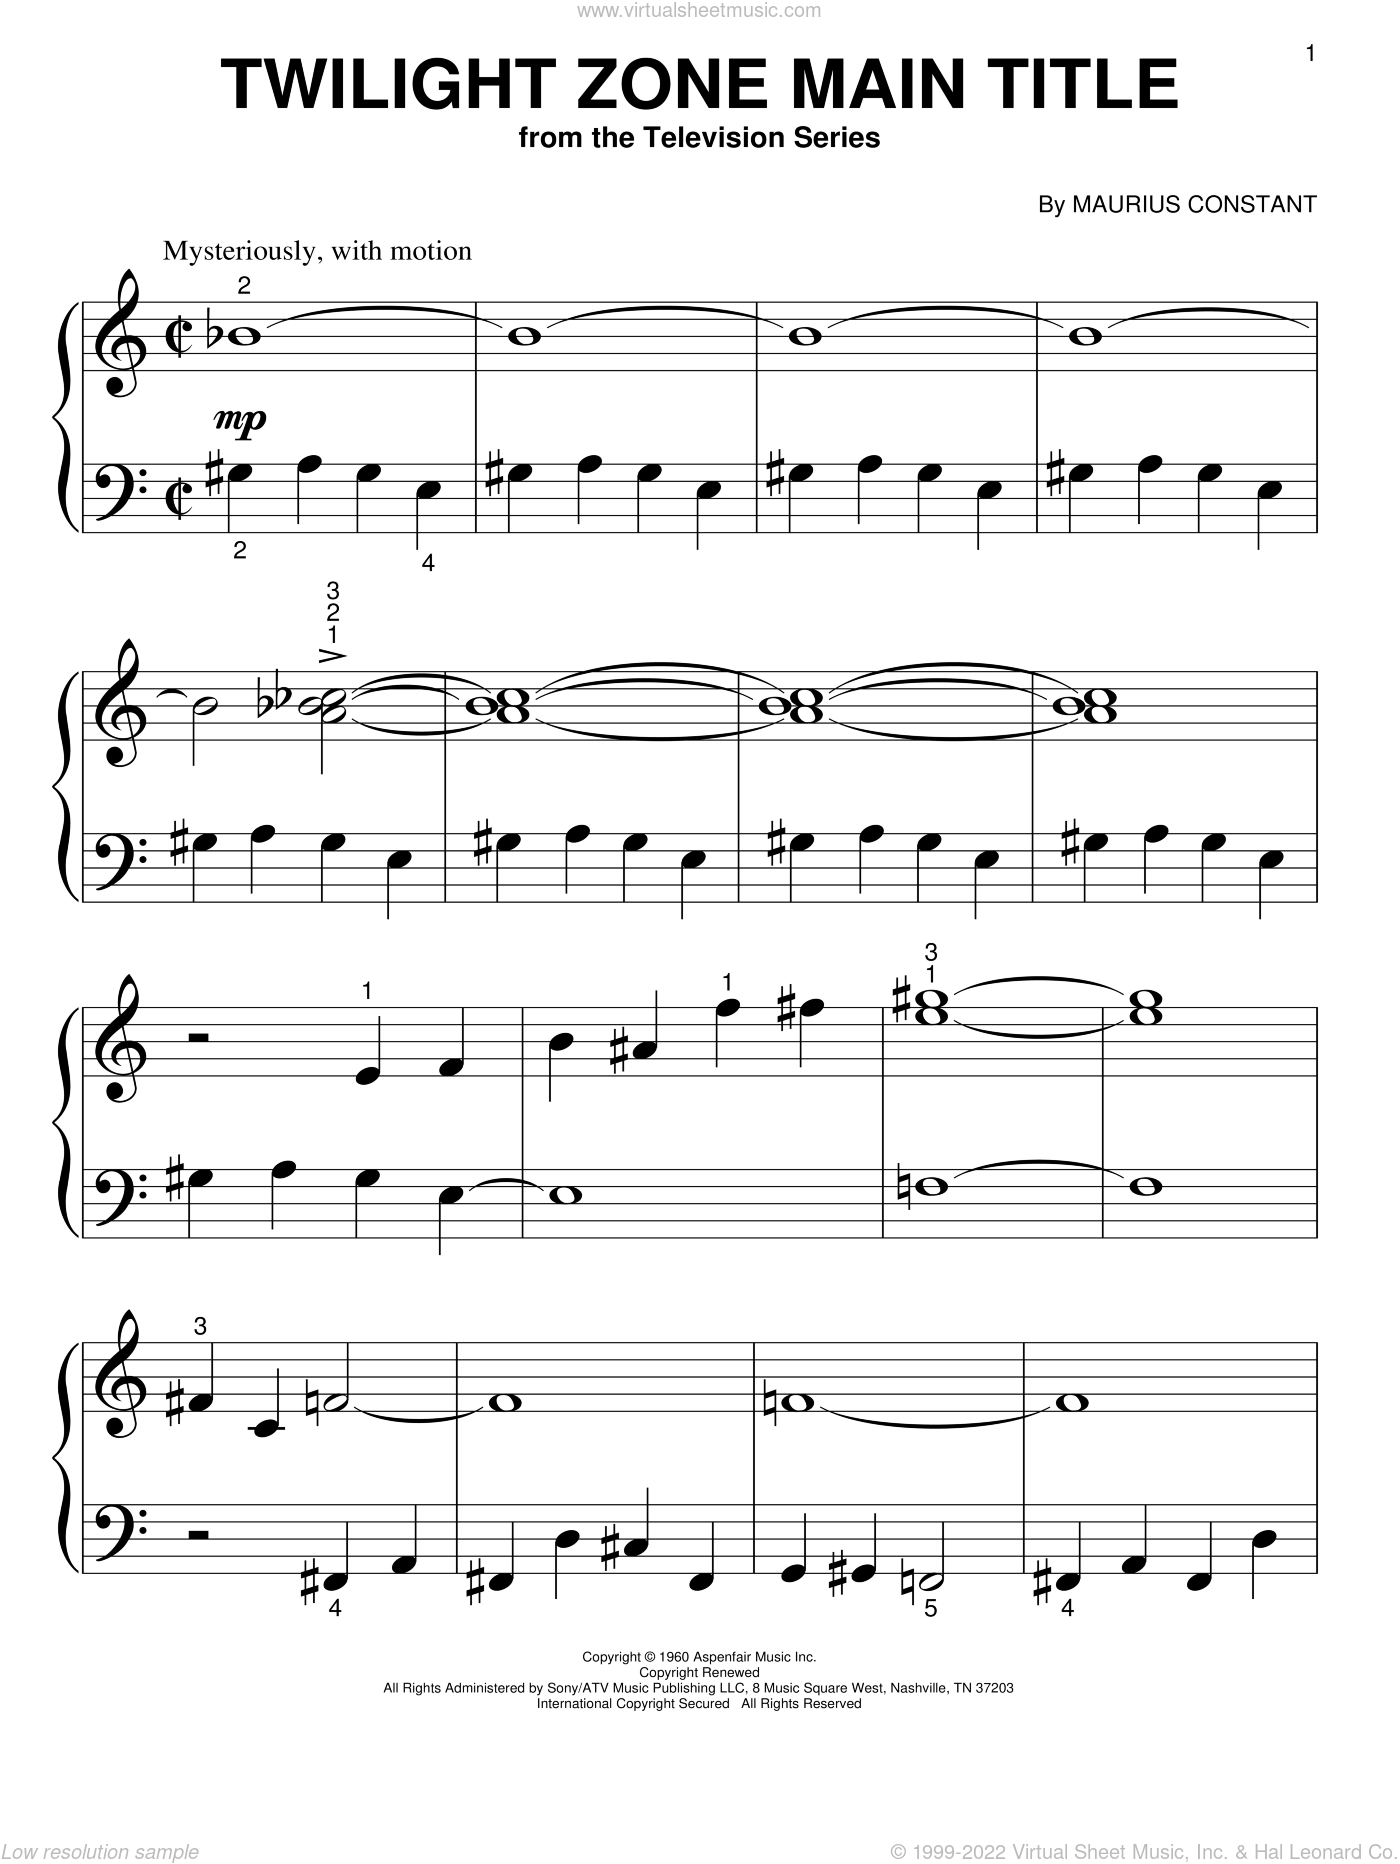 Constant - Twilight Zone Main Title sheet music for piano solo (big